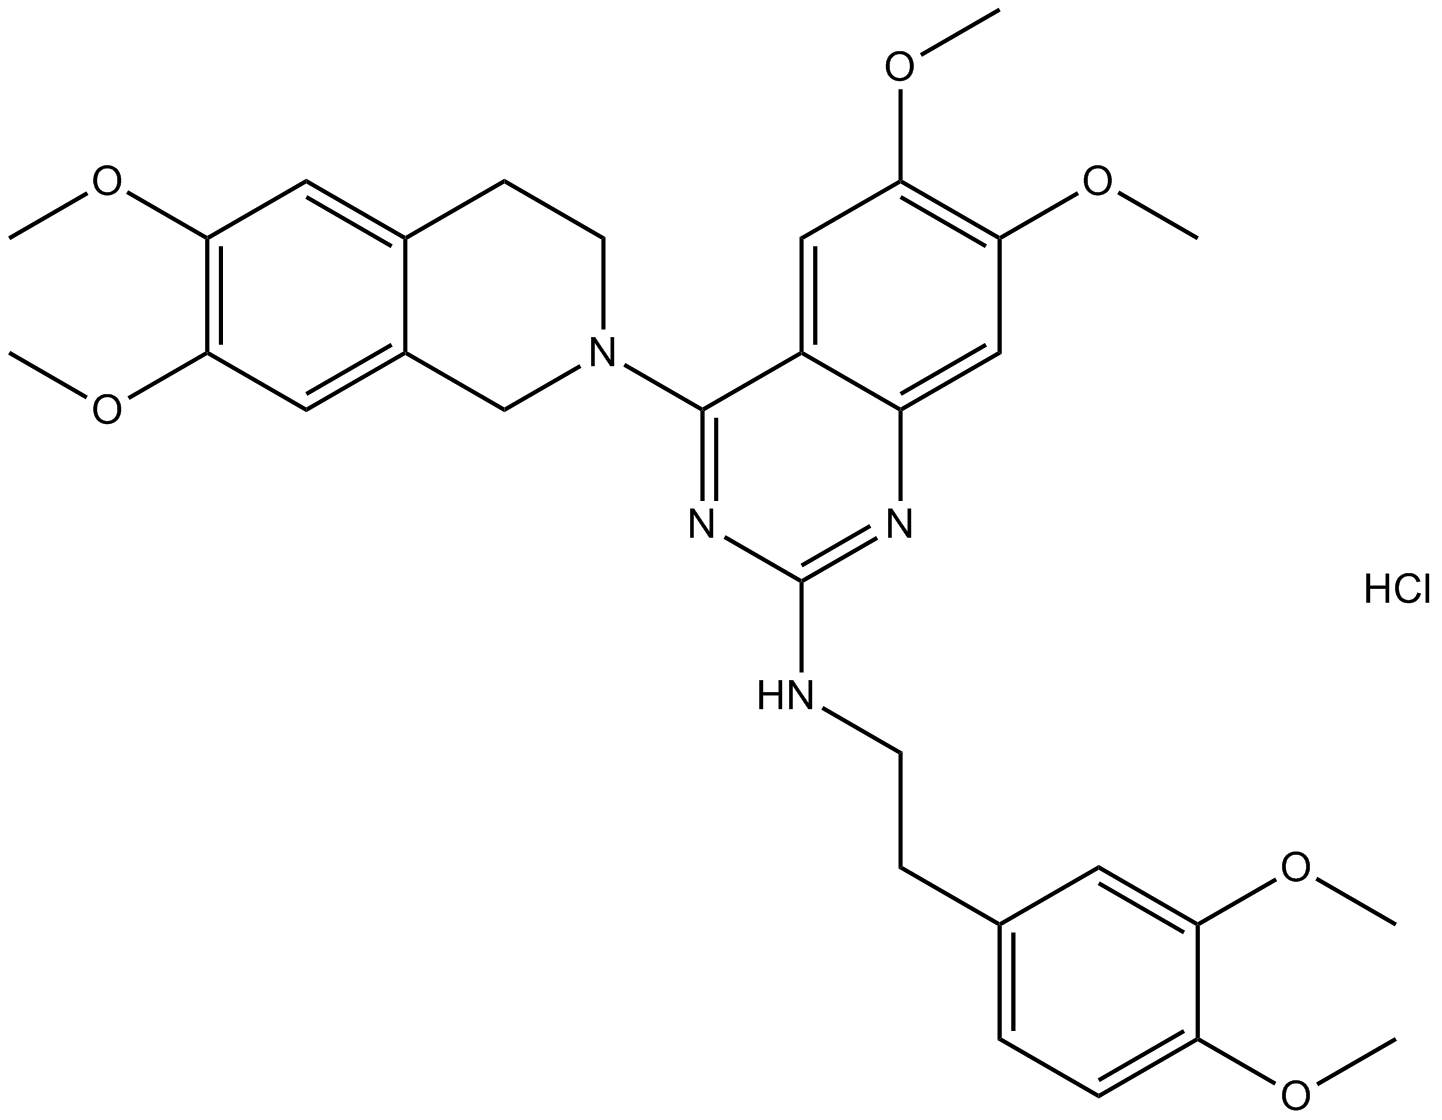 CP 100356 hydrochloride